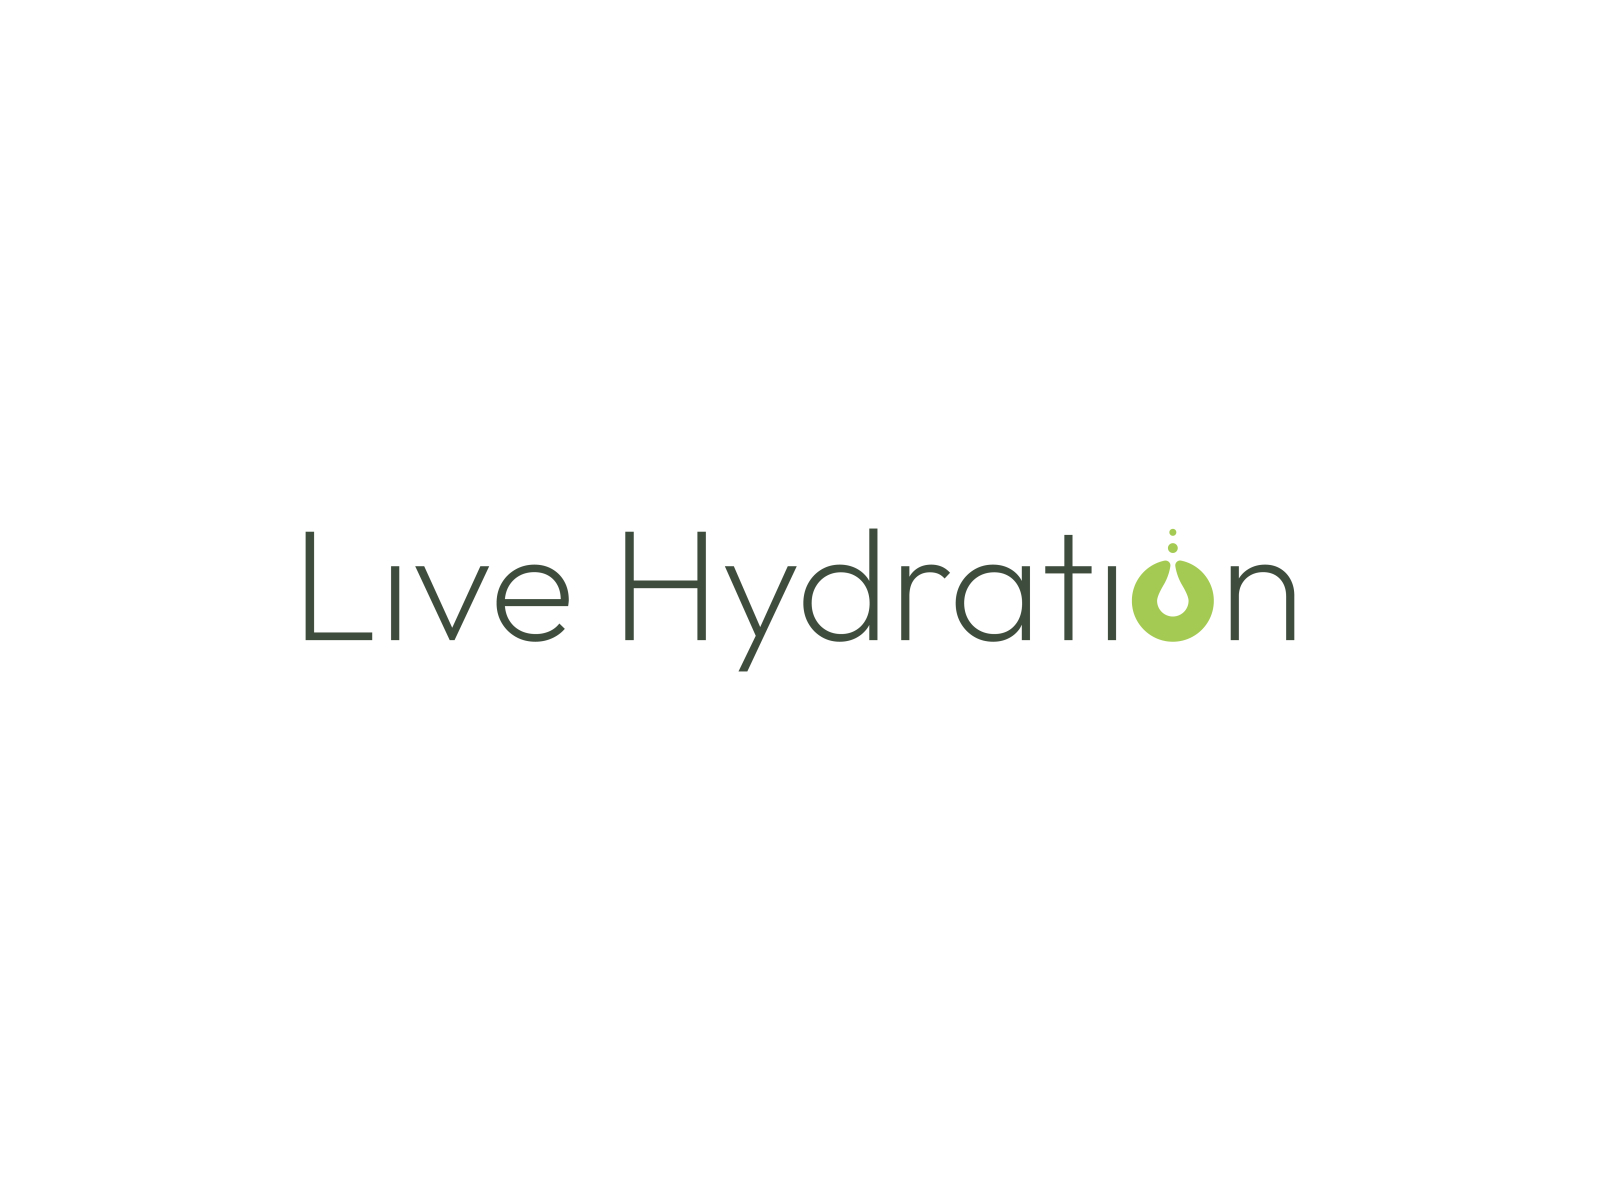 Live Hydration logo design by Shakhboz Turaev on Dribbble